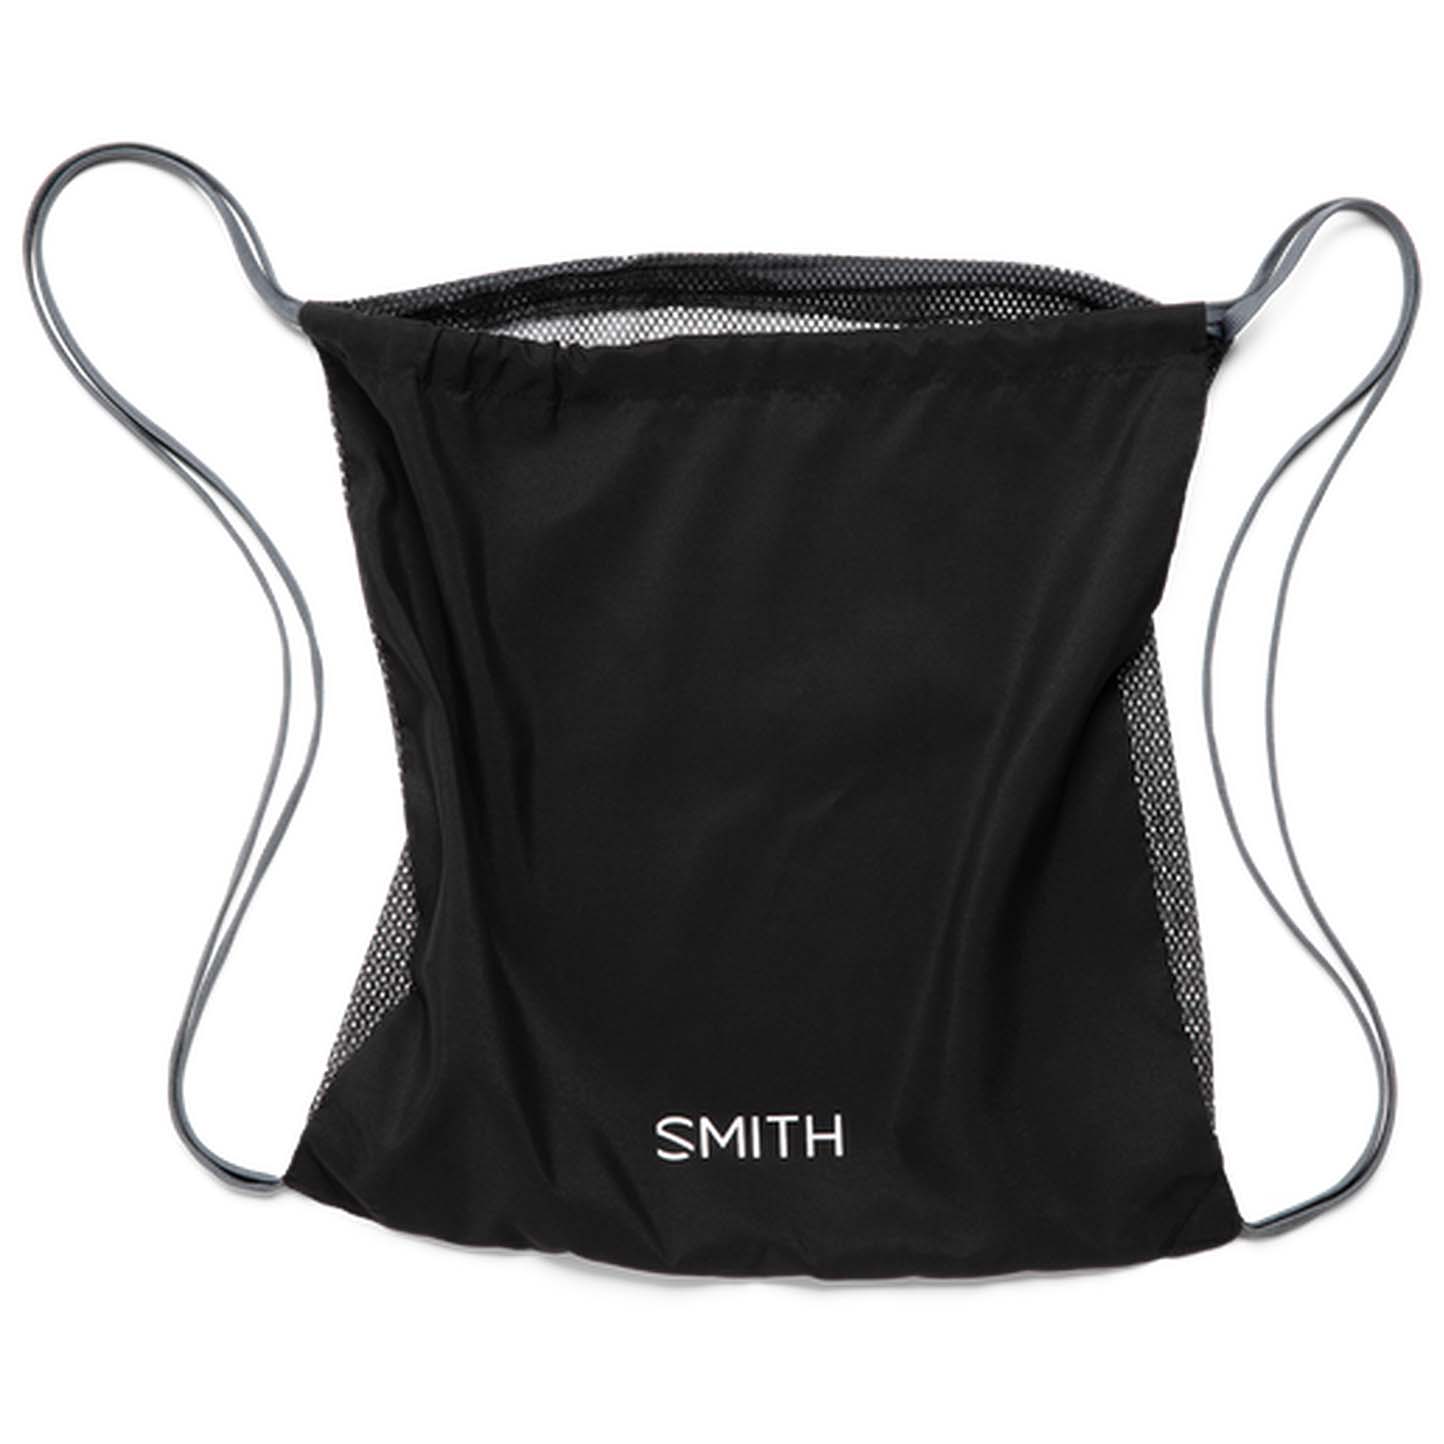 Smith Mondo MIPS Ski/Snowboard Helmet